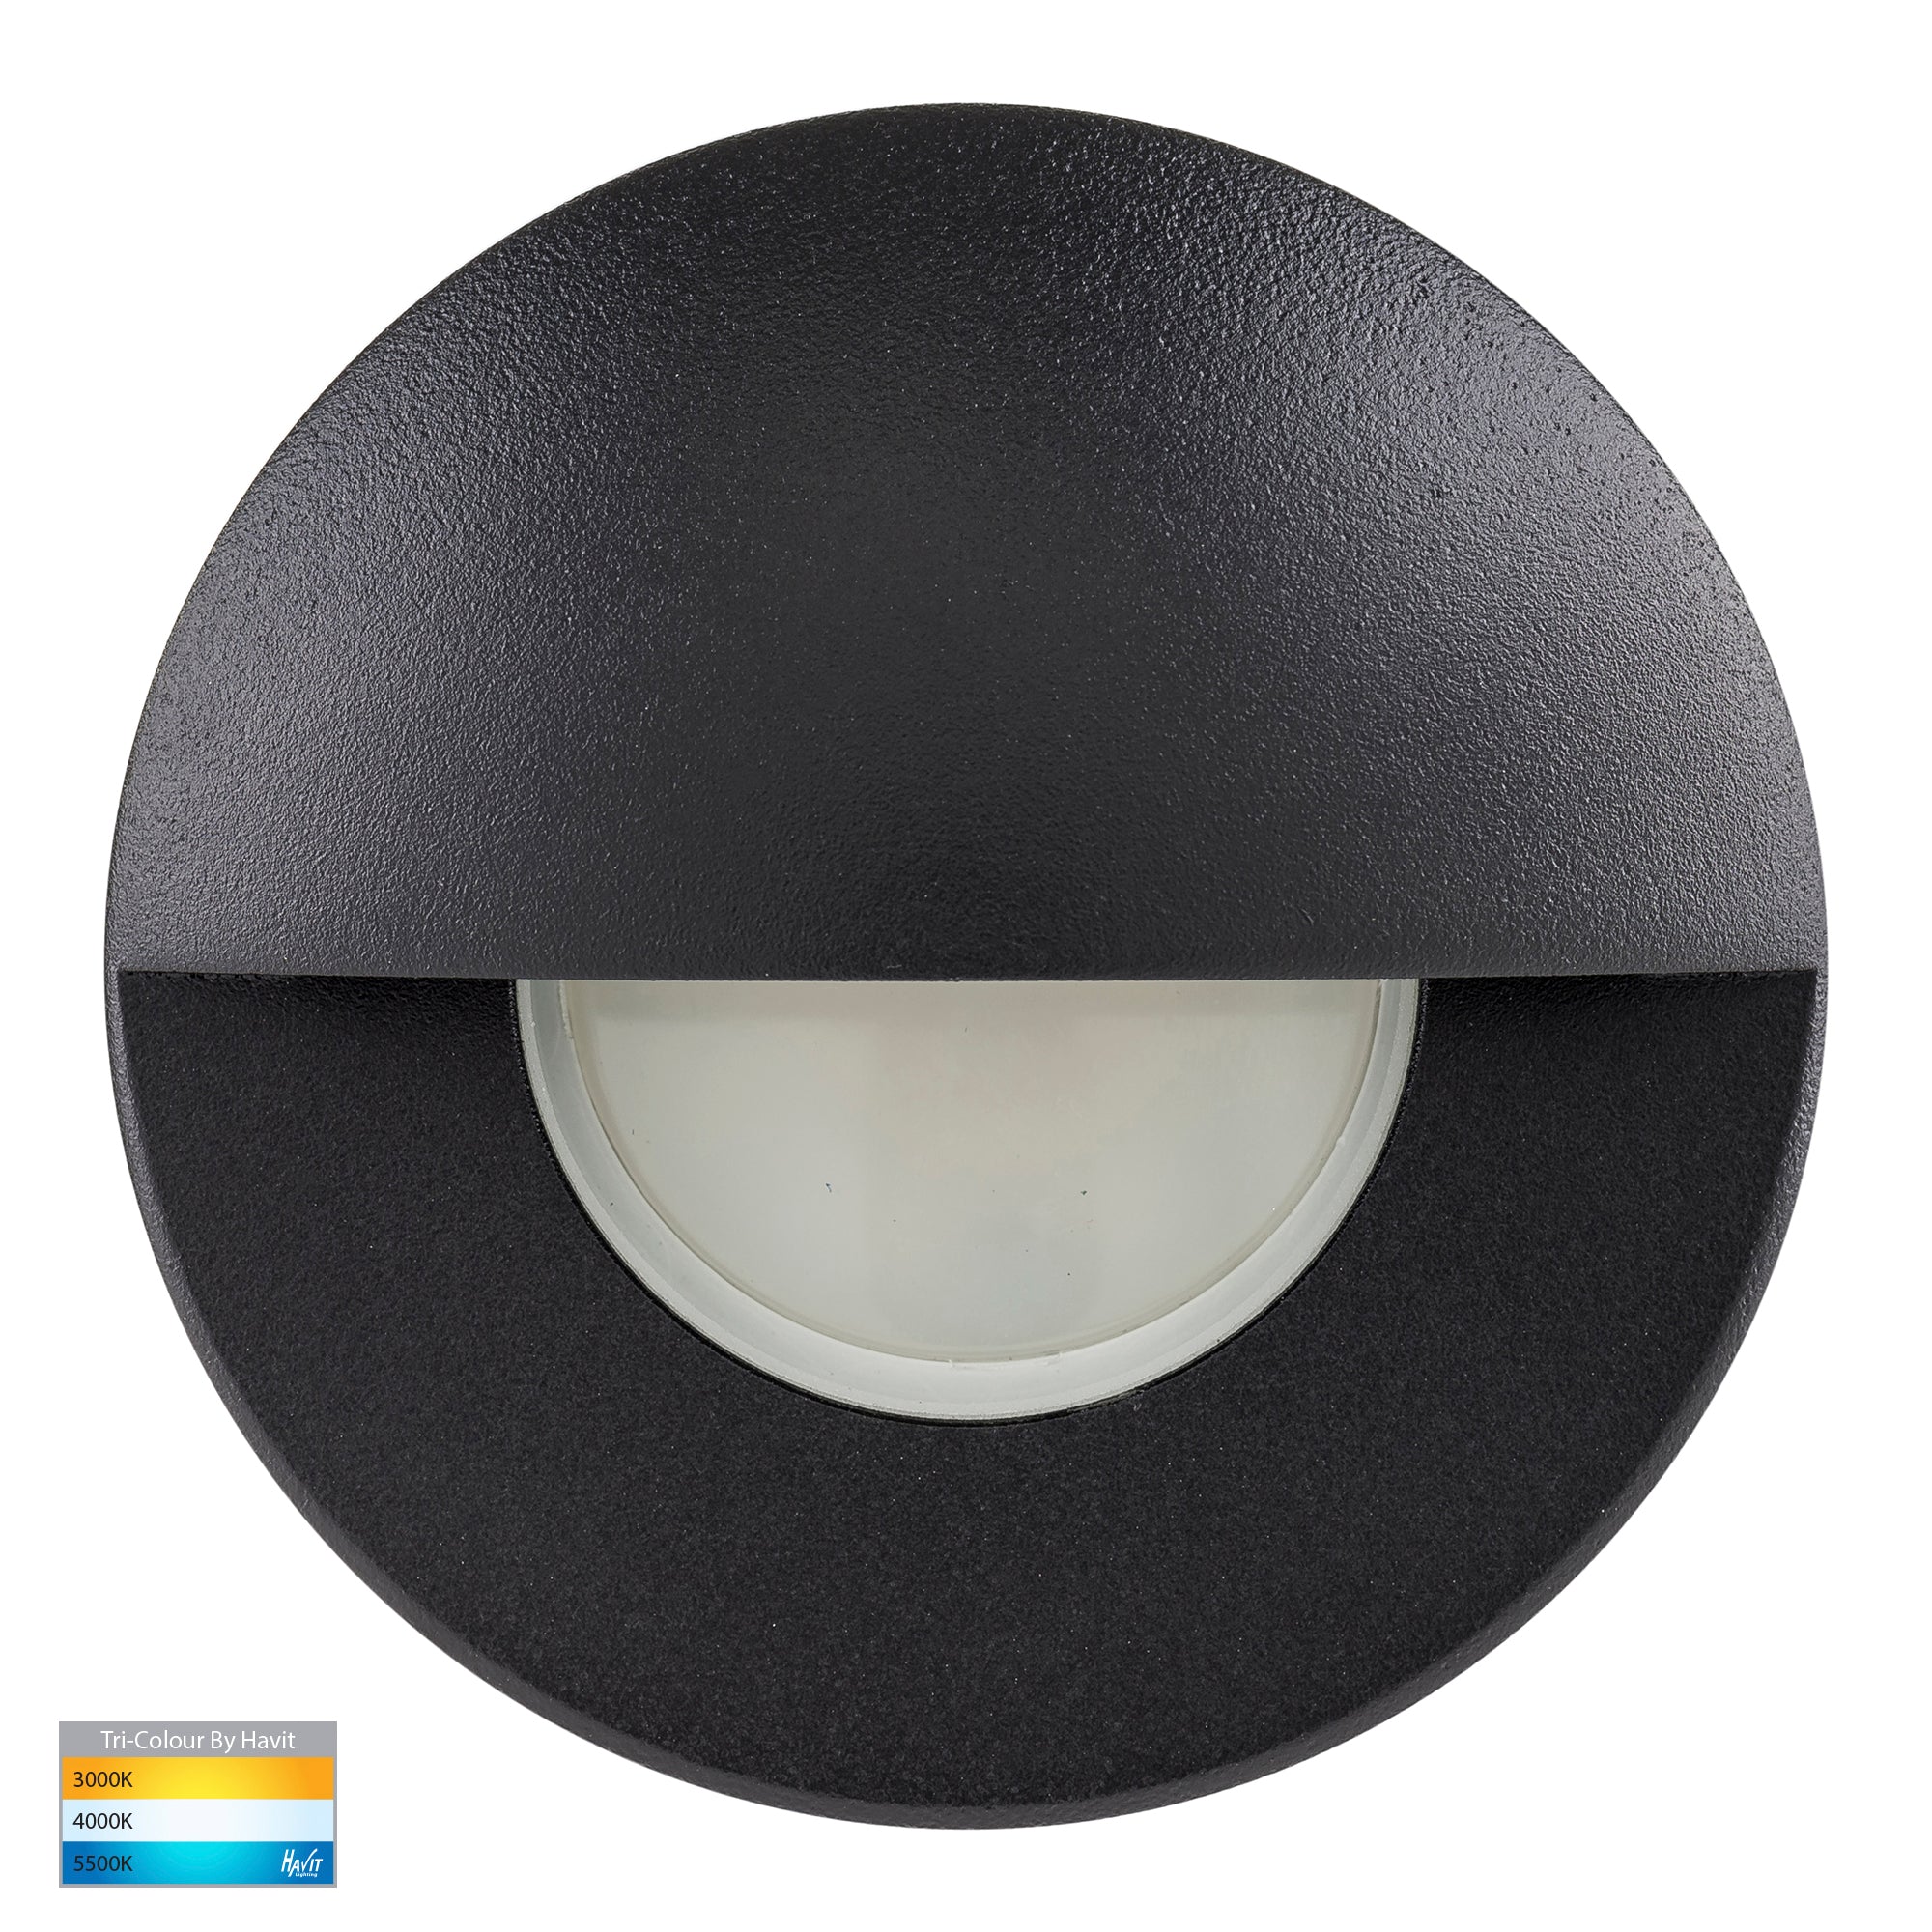 HV19012T-BLK - Ollo Black TRI Colour LED Step Light With Eyelid